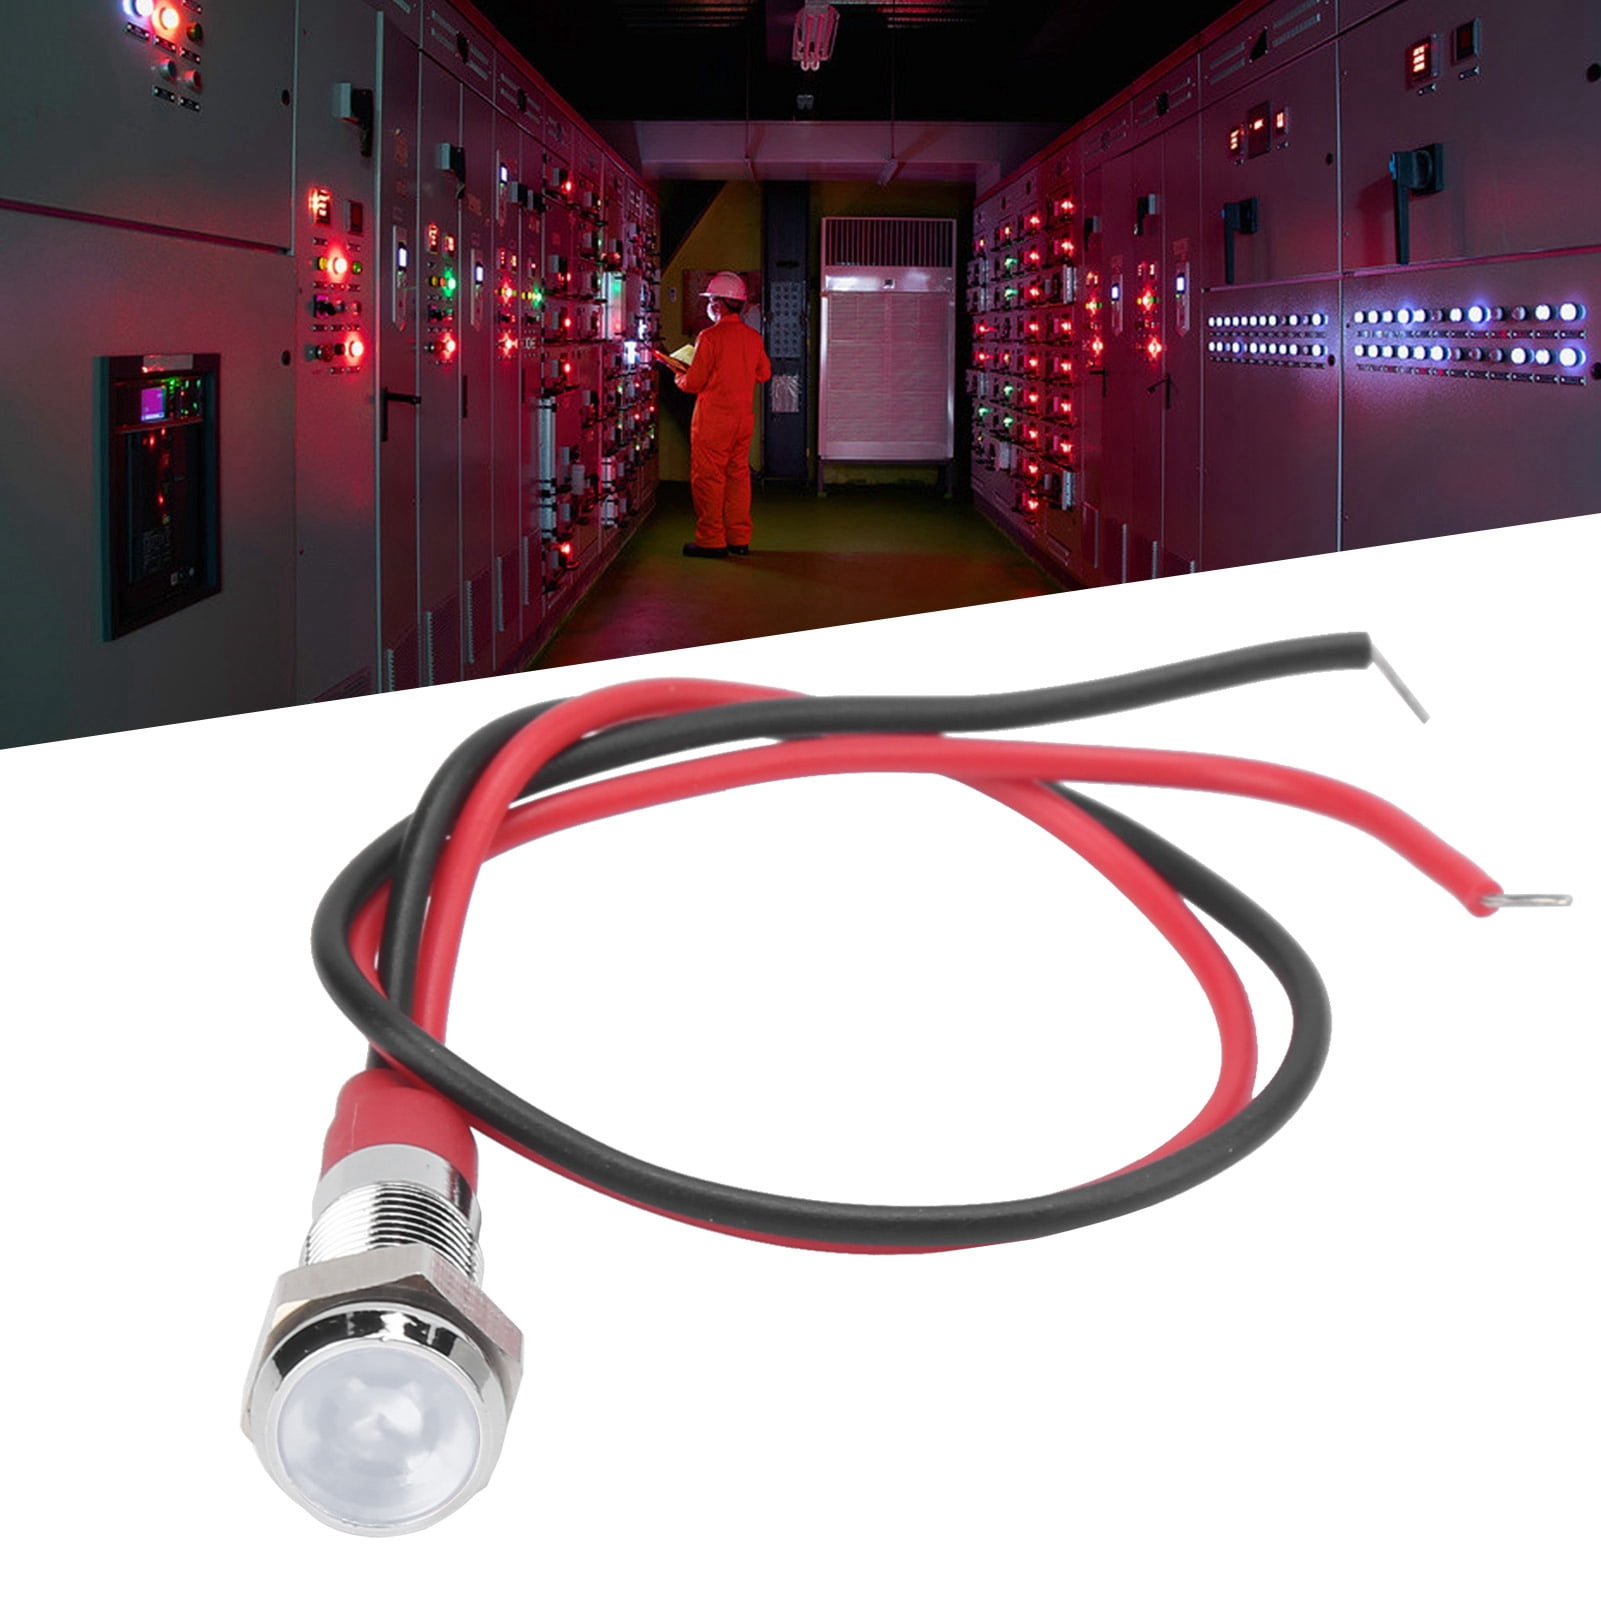 2pcs RED JEWEL 6V PILOT LIGHT LAMP Power INDICATOR for Amplifier Audio Equipment